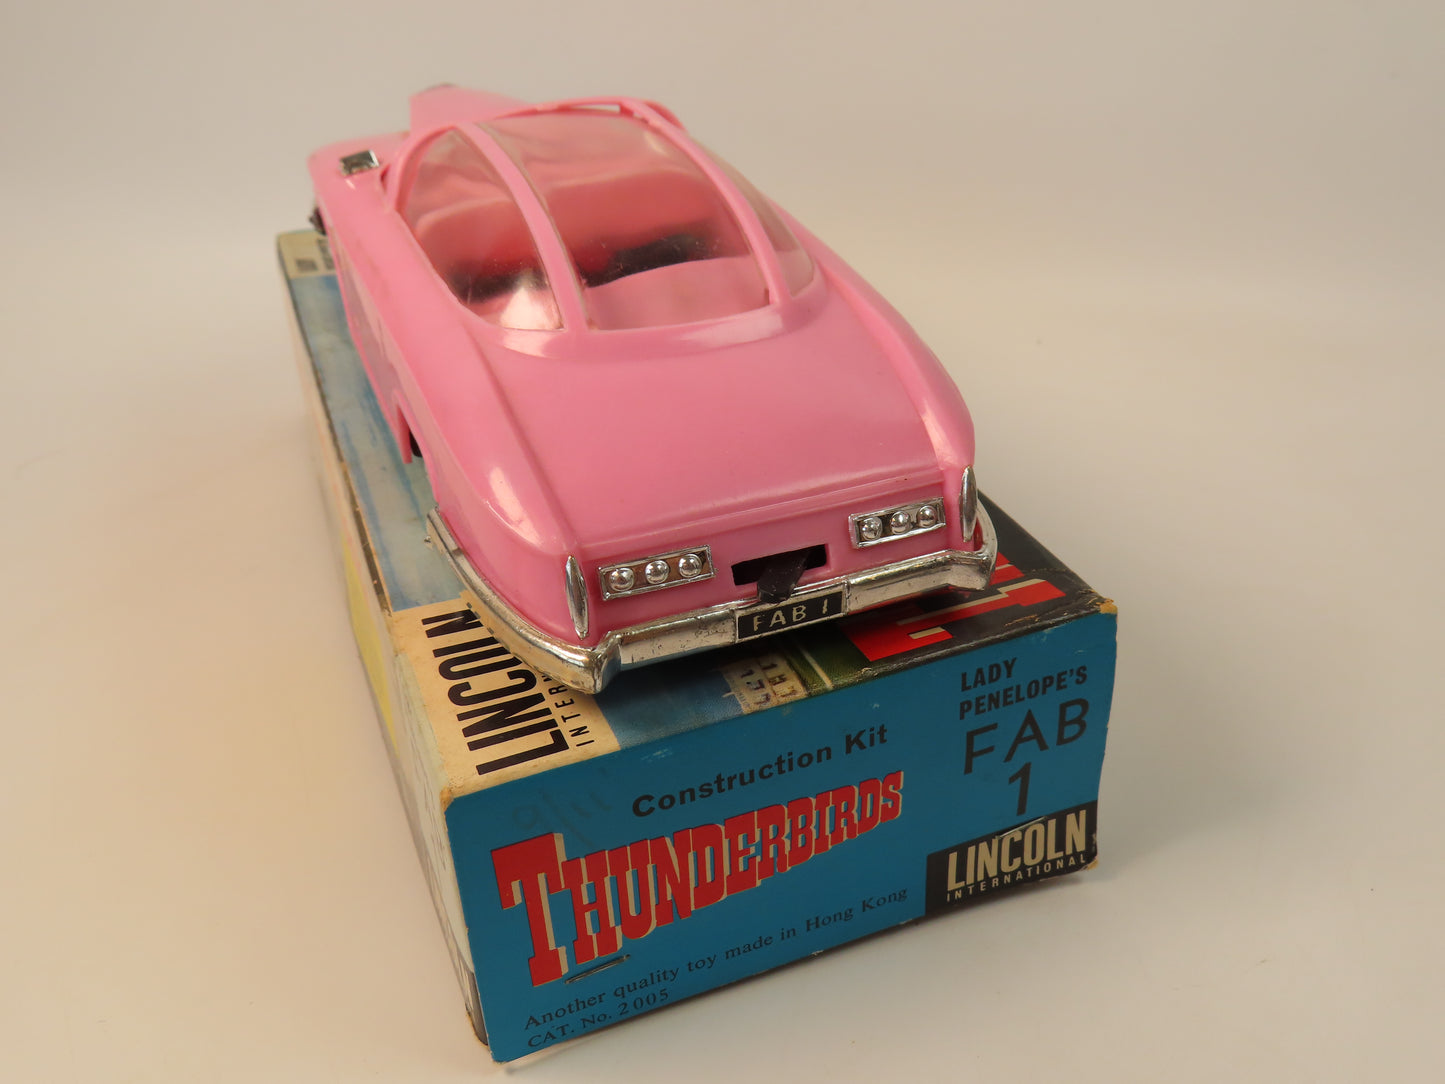 Lincoln International Lady Penelope's Fab 1 - Thunderbirds Contruction Kit - Made/Boxed!